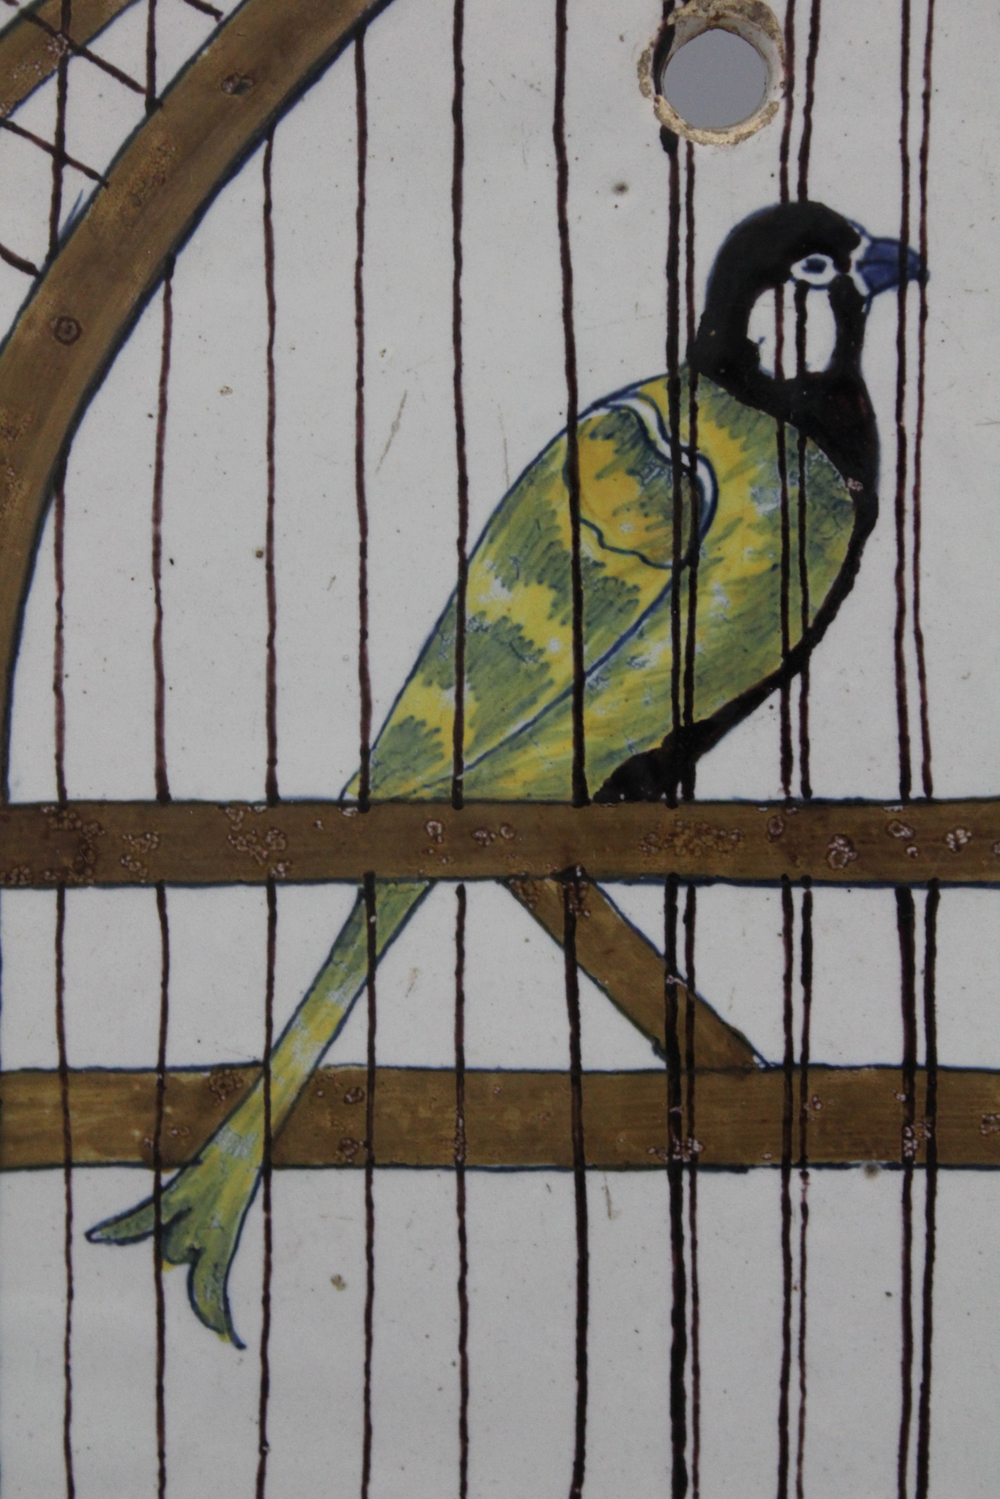 A Dutch Delft polychrome trompe l'oeil  plaque with a bird in a cage, 18th C.